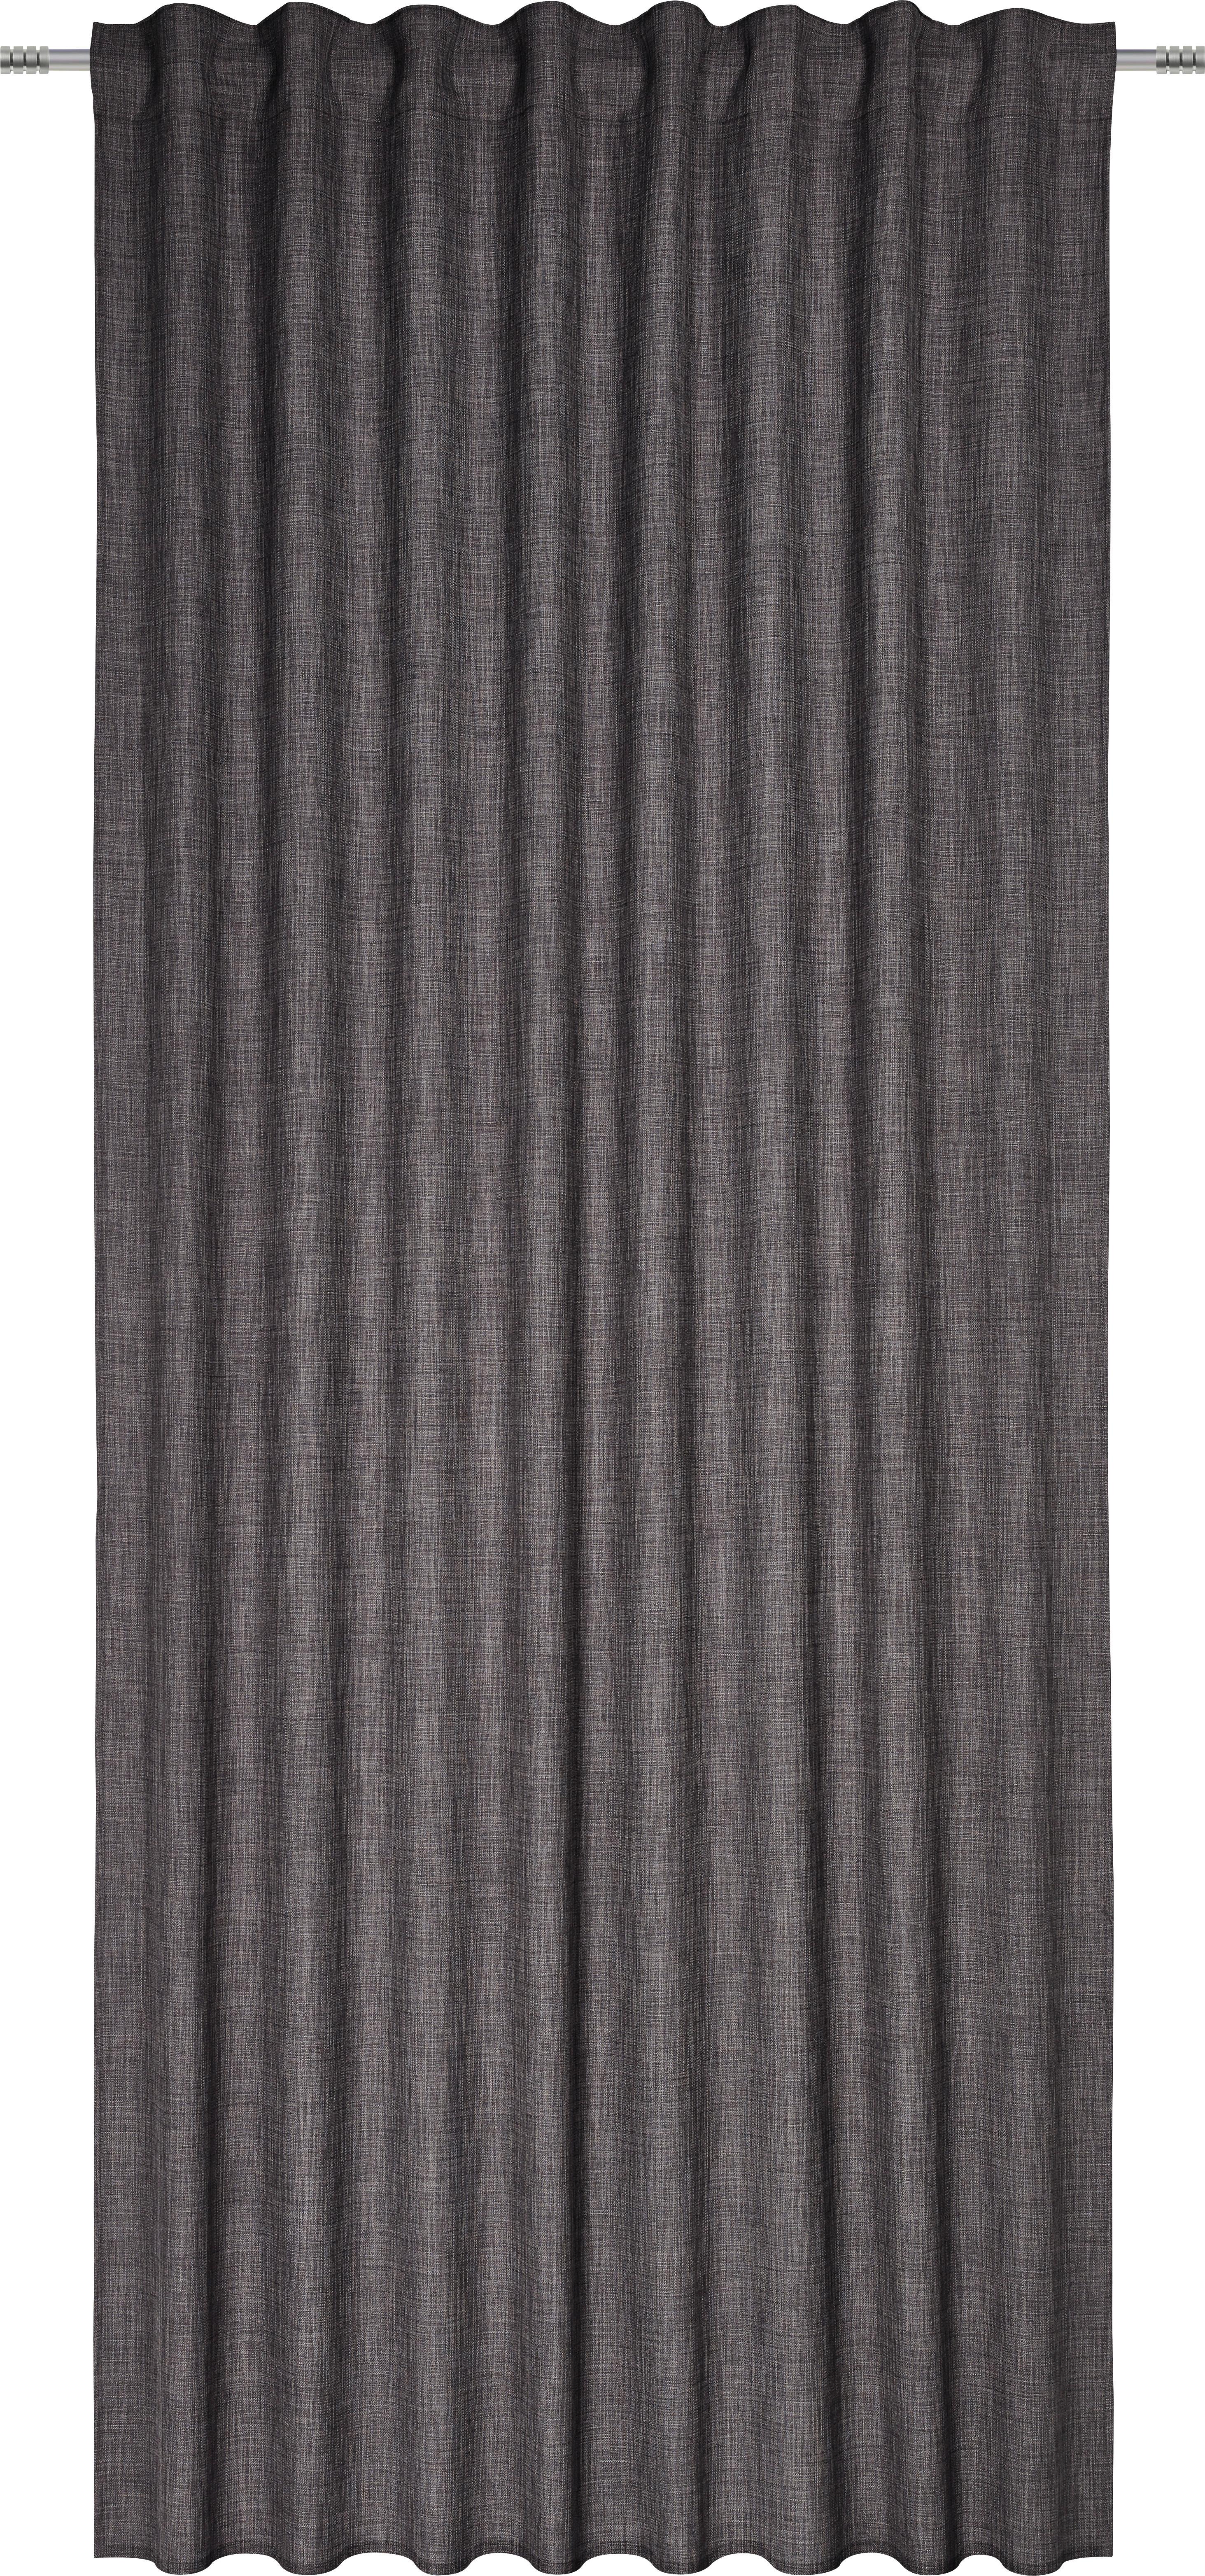 Fertigvorhang Leo in Grau ca. 135x255cm - Grau, Textil (135/255cm) - Premium Living